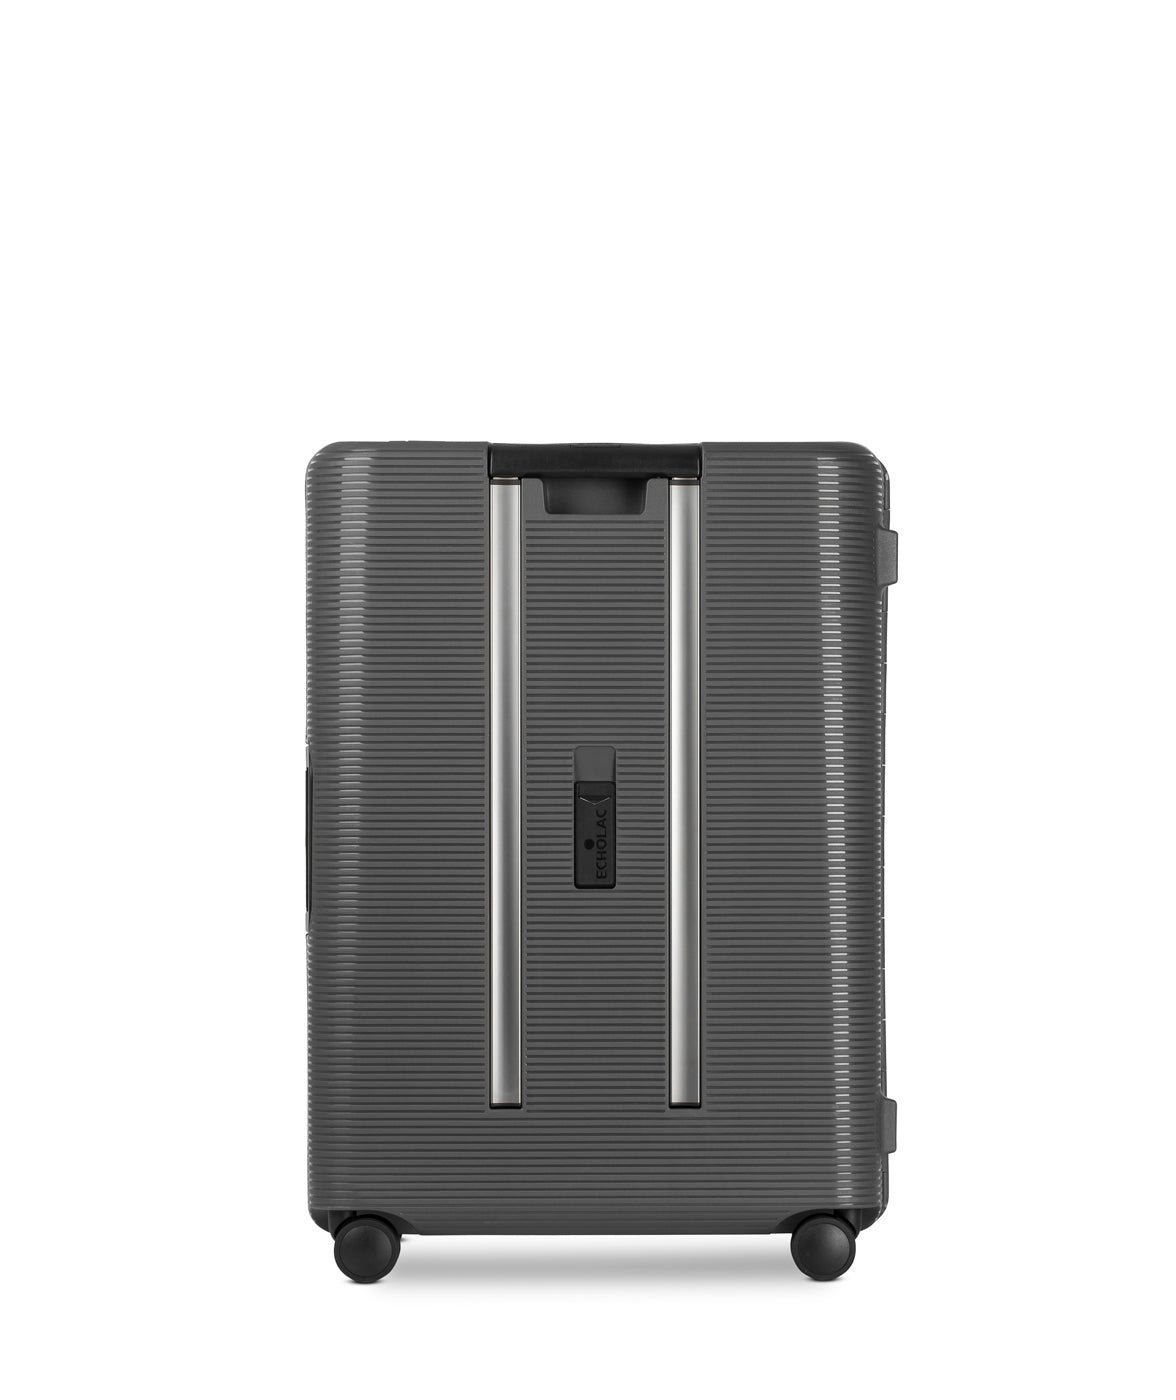 Echolac Fusion Koffer, Medium 66 cm, Dunkelgrau hinten 